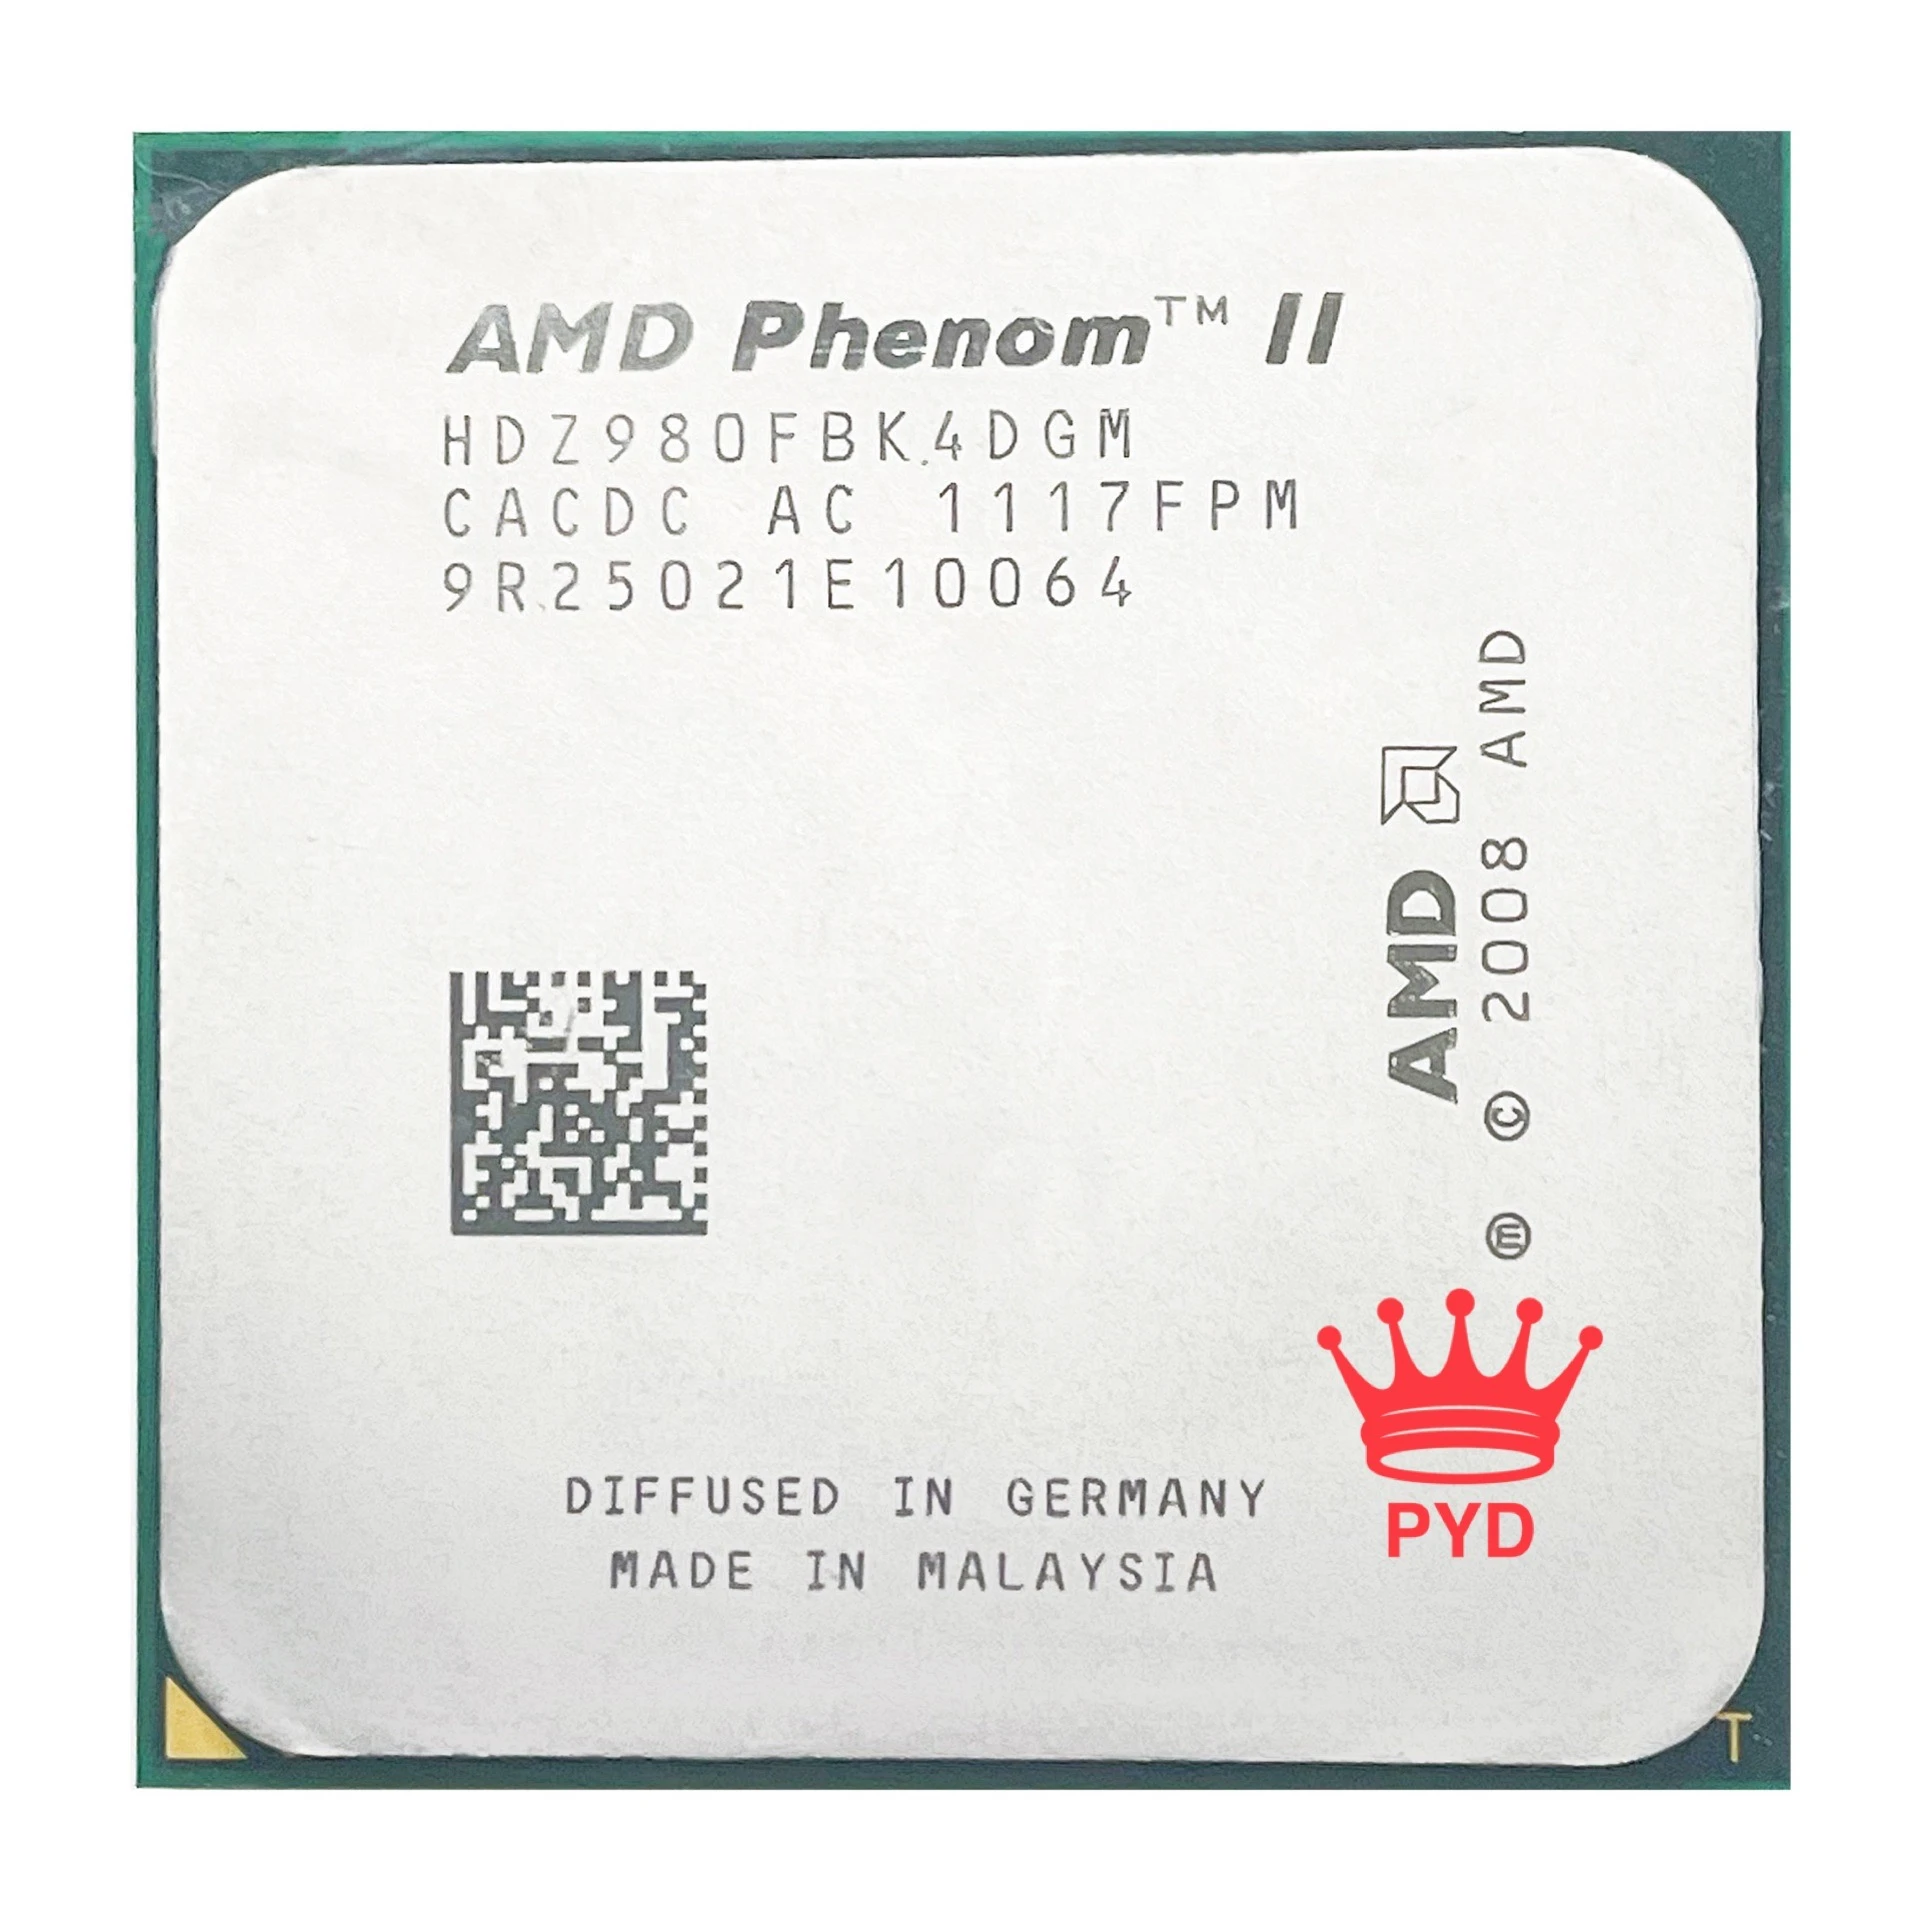 AMD Phenom II X4 980 3.7 GHz Quad-Core CPU Processor HDZ980FBK4DGM Socket AM3 fastest cpu